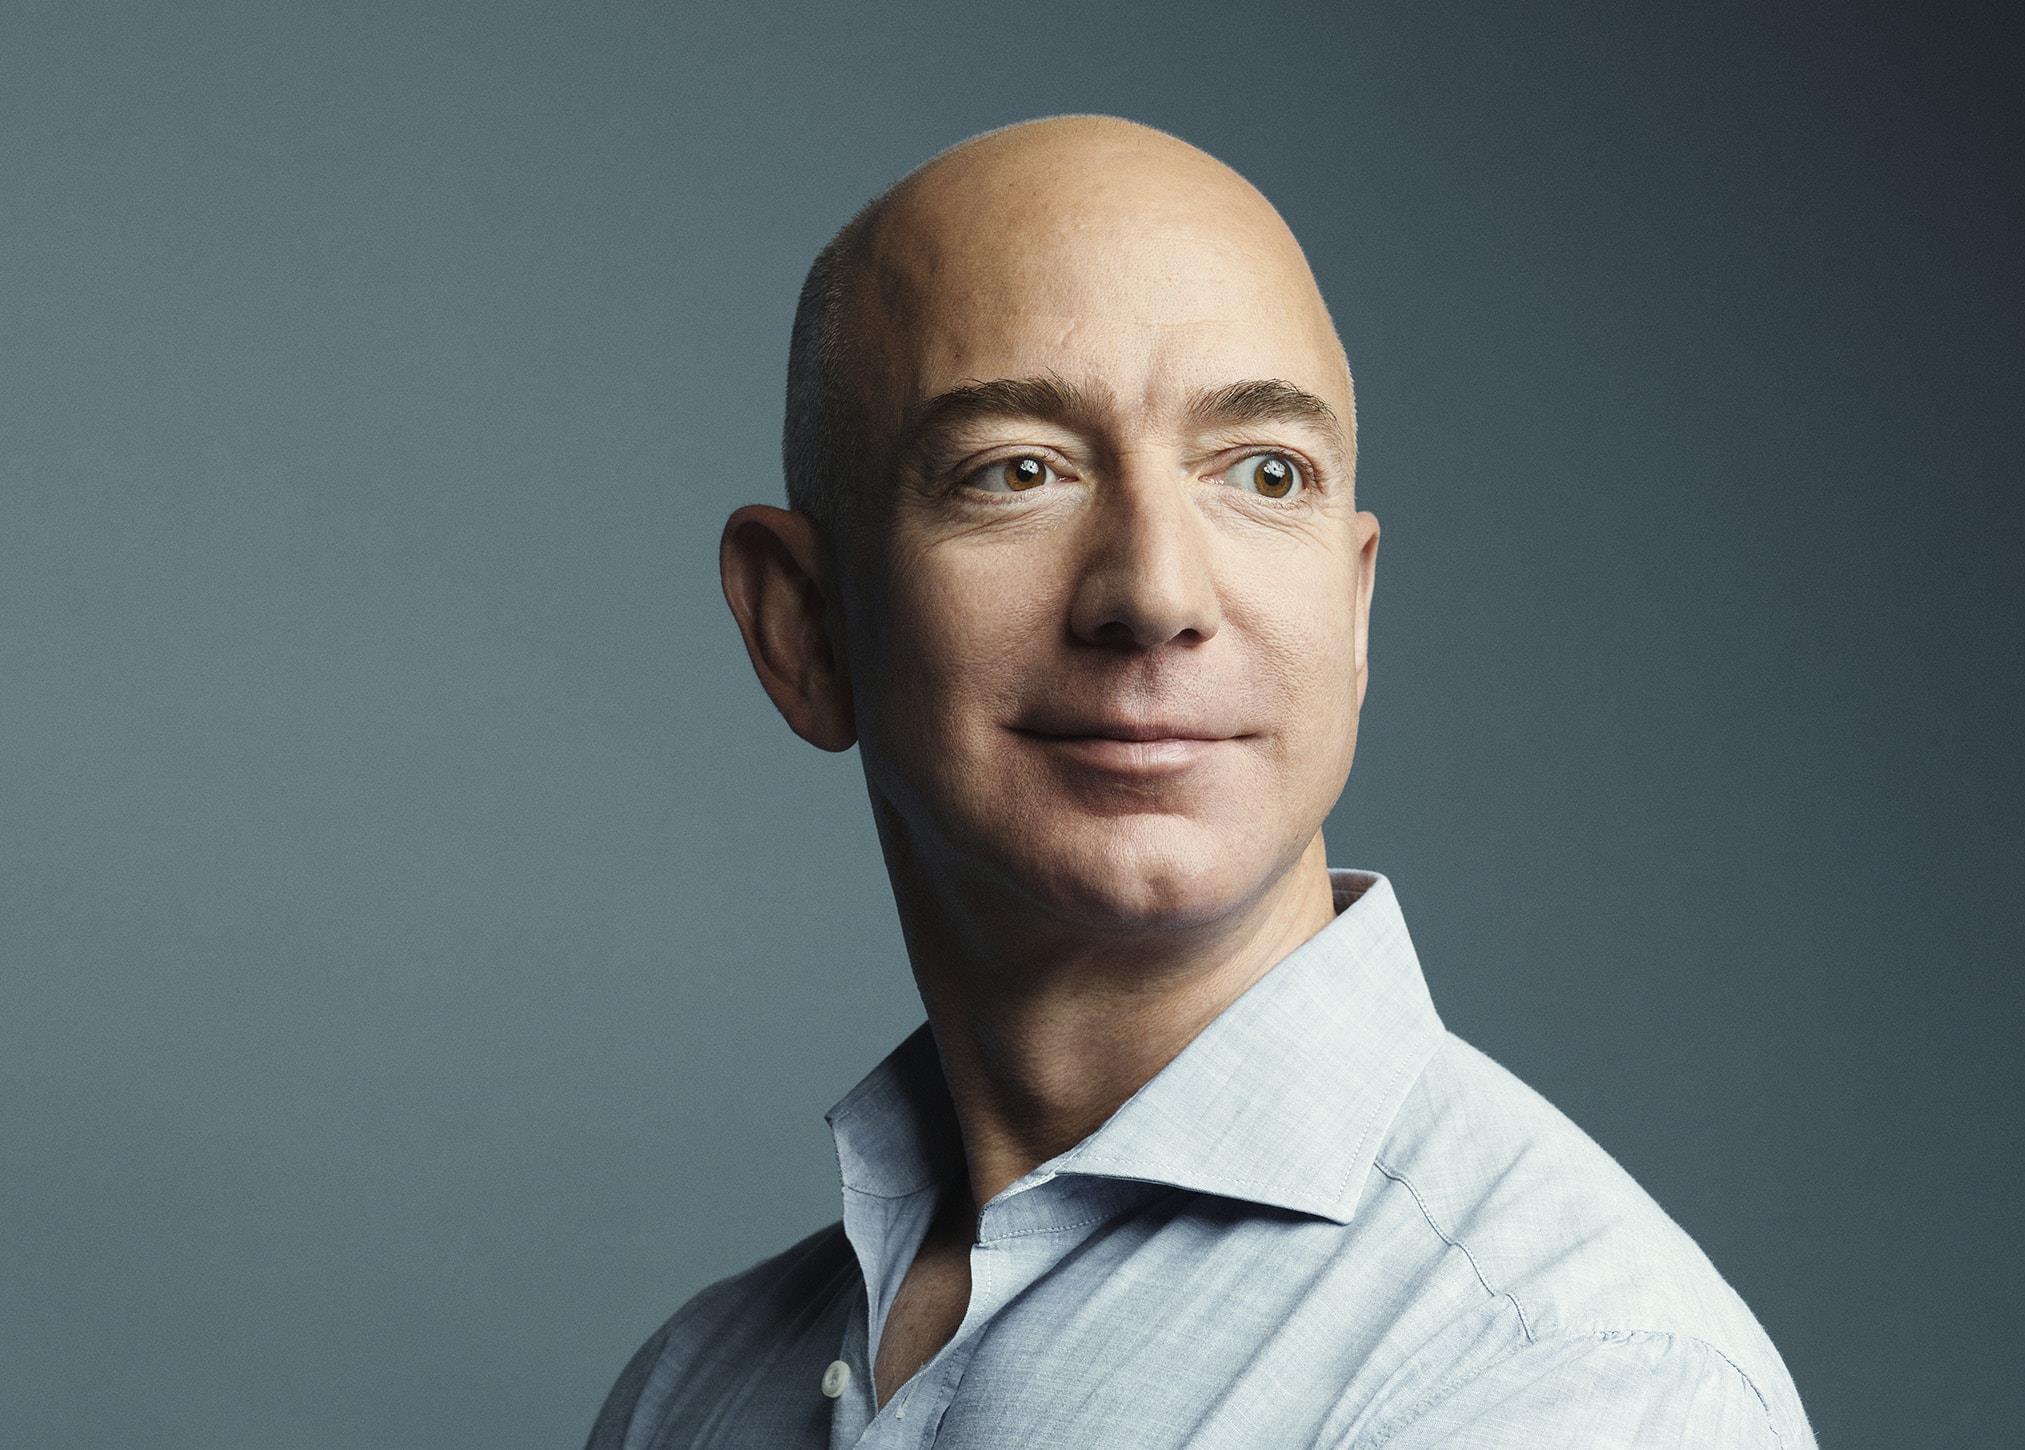 Jeff Bezos - CEO of Amazon